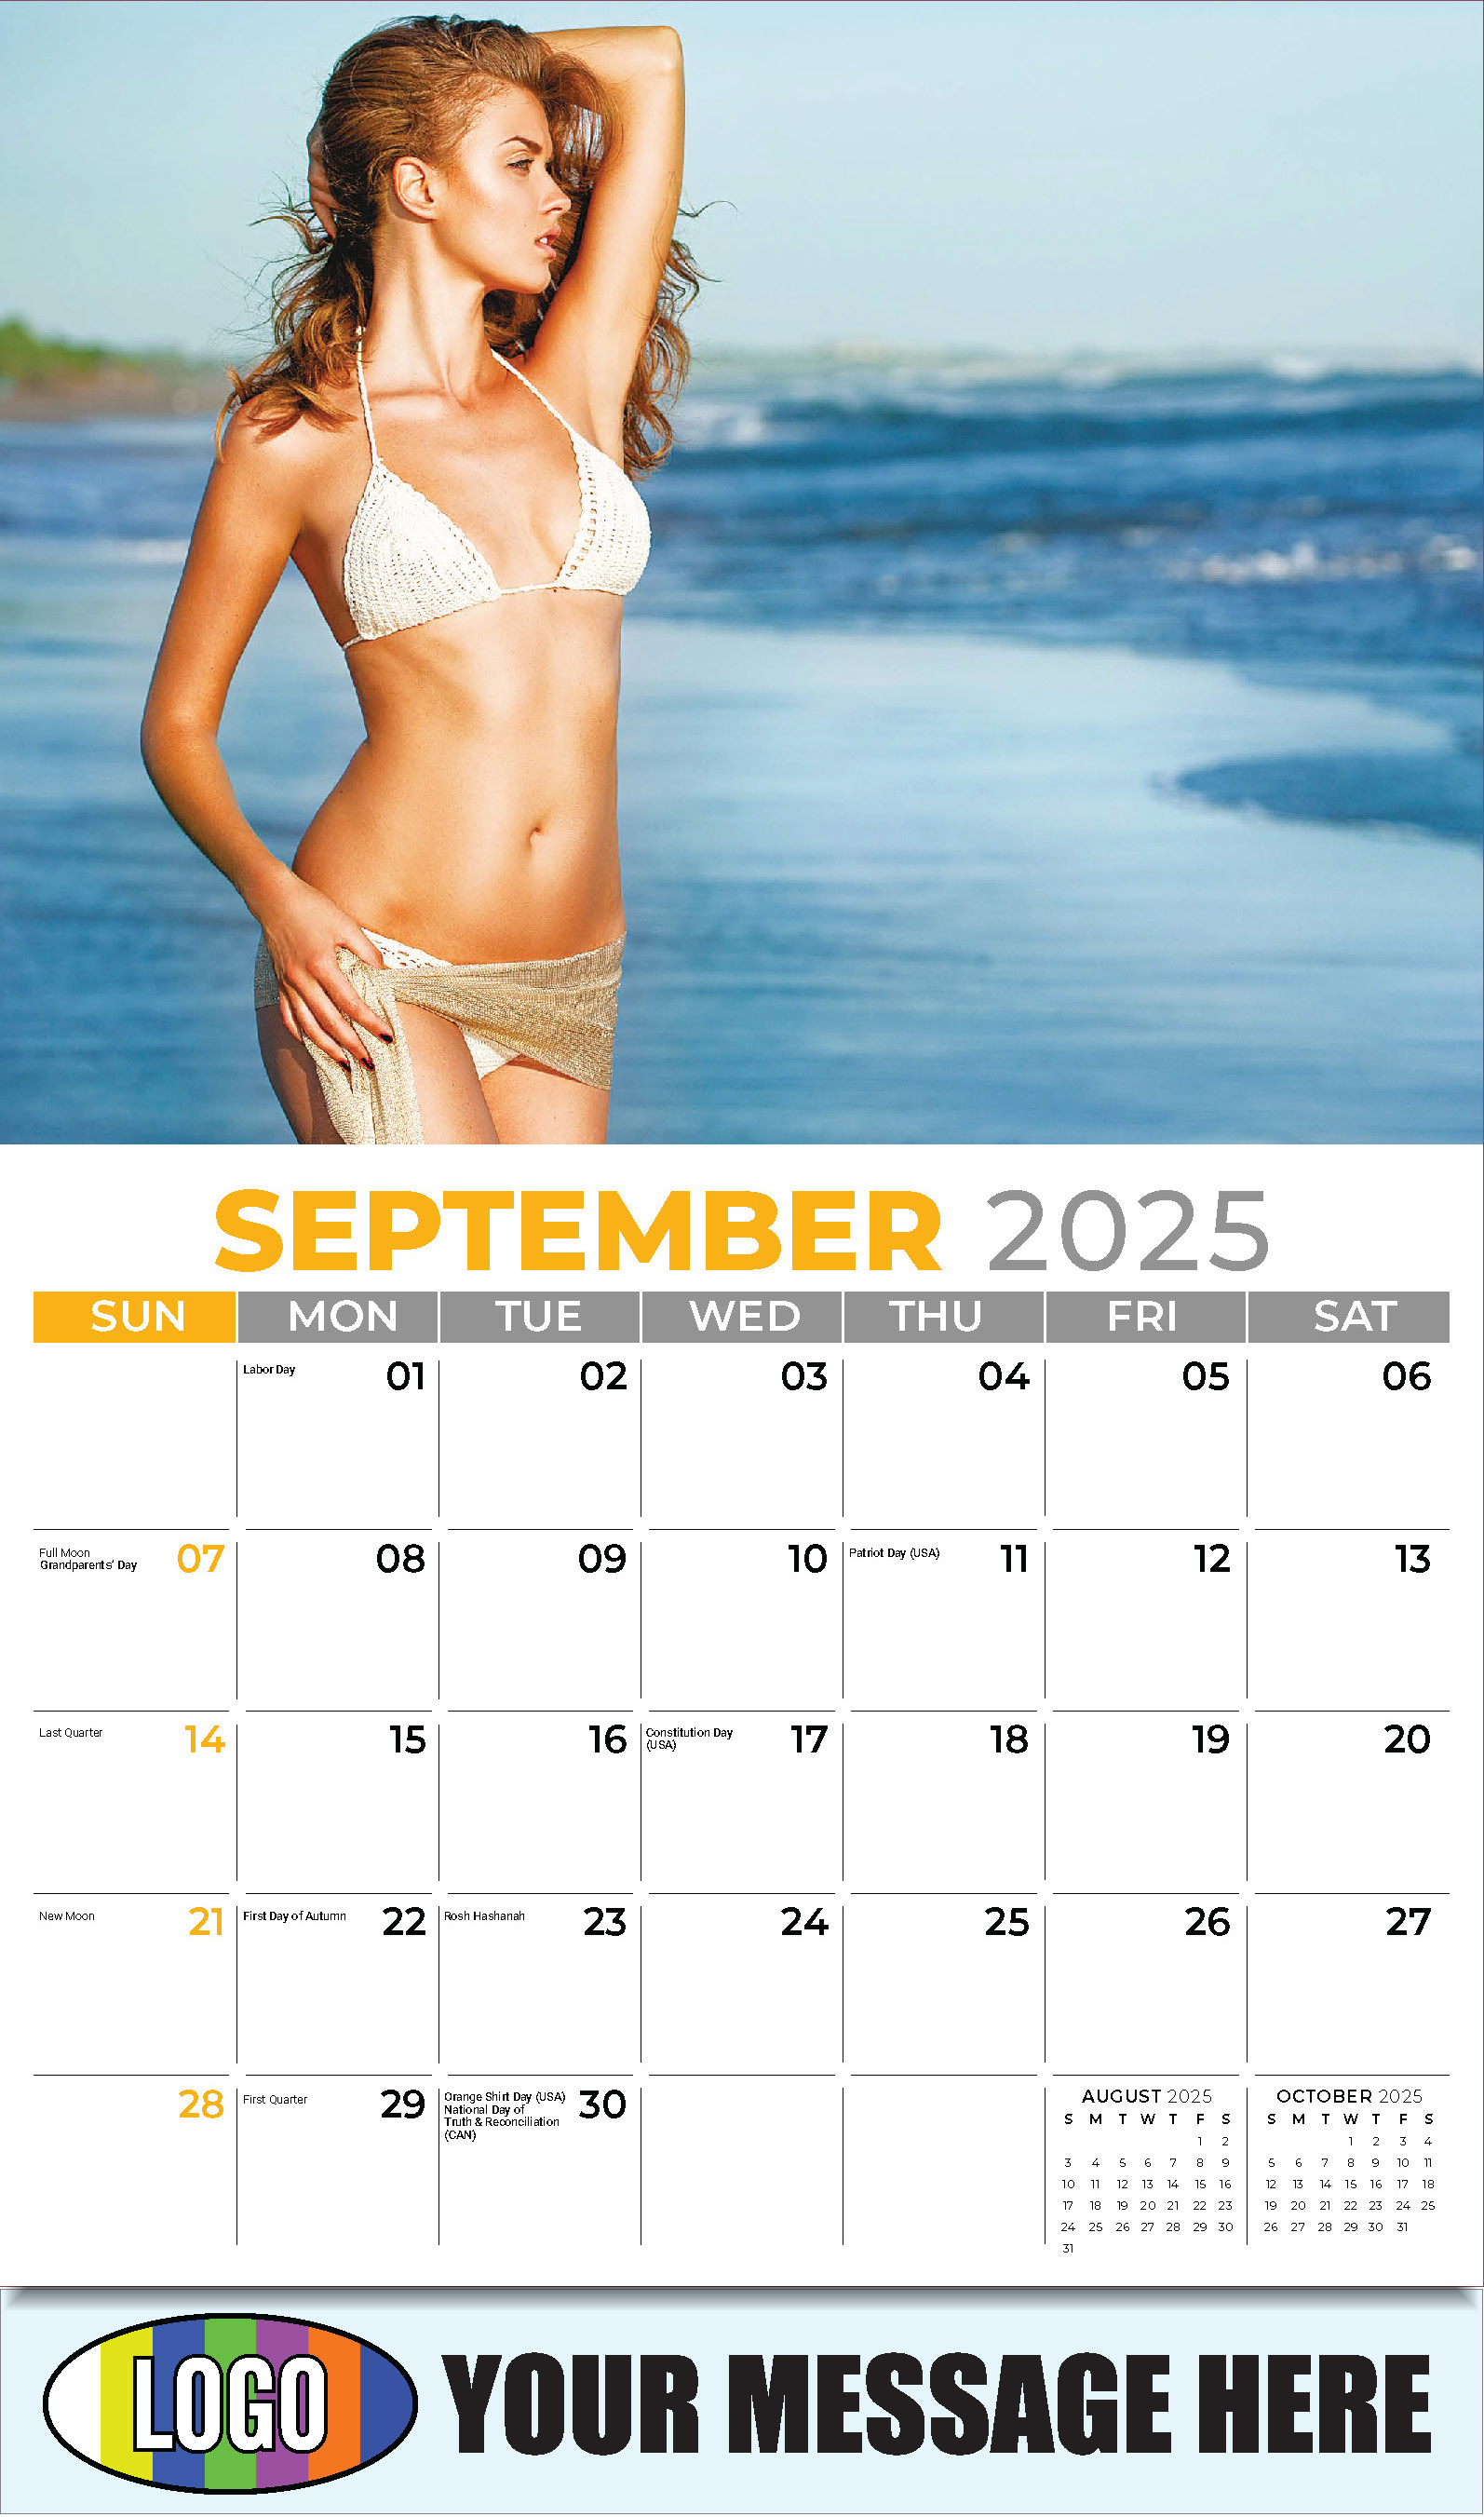 Swimsuits 2025 Business Promotional Wall Calendar - September